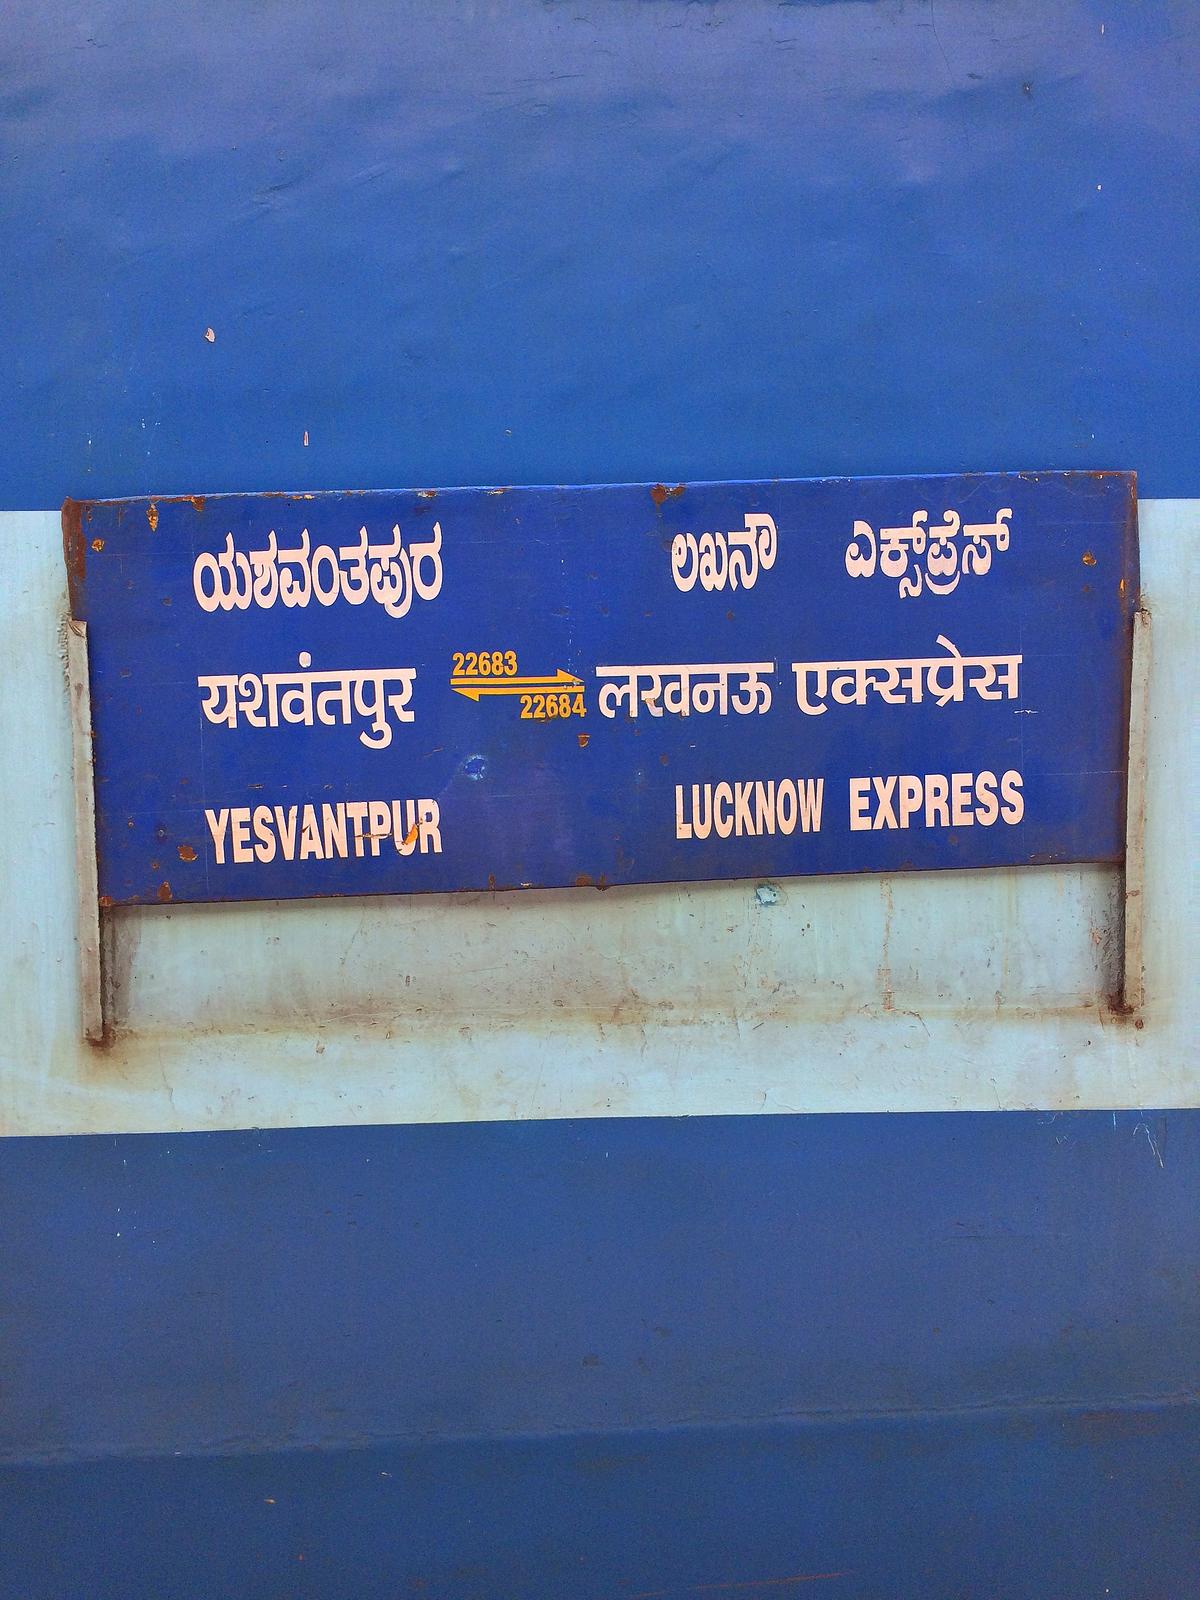 Lucknow - Yesvantpur SF Express (via Kacheguda)/22684 Travel Tips